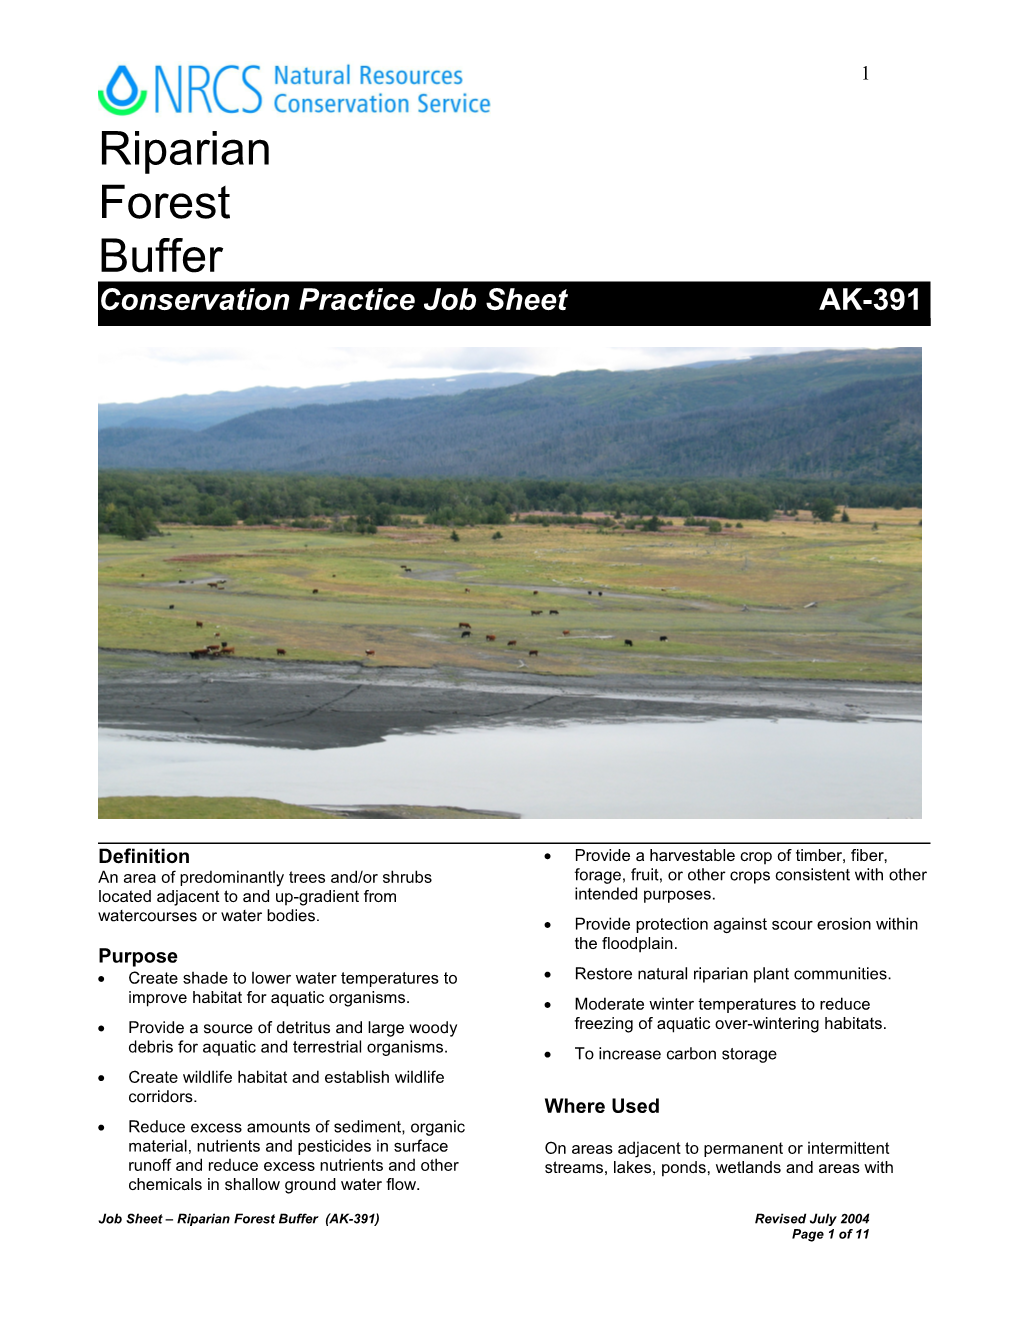 Job Sheet Riparian Forest Buffer (AK-391)Revised July 2004